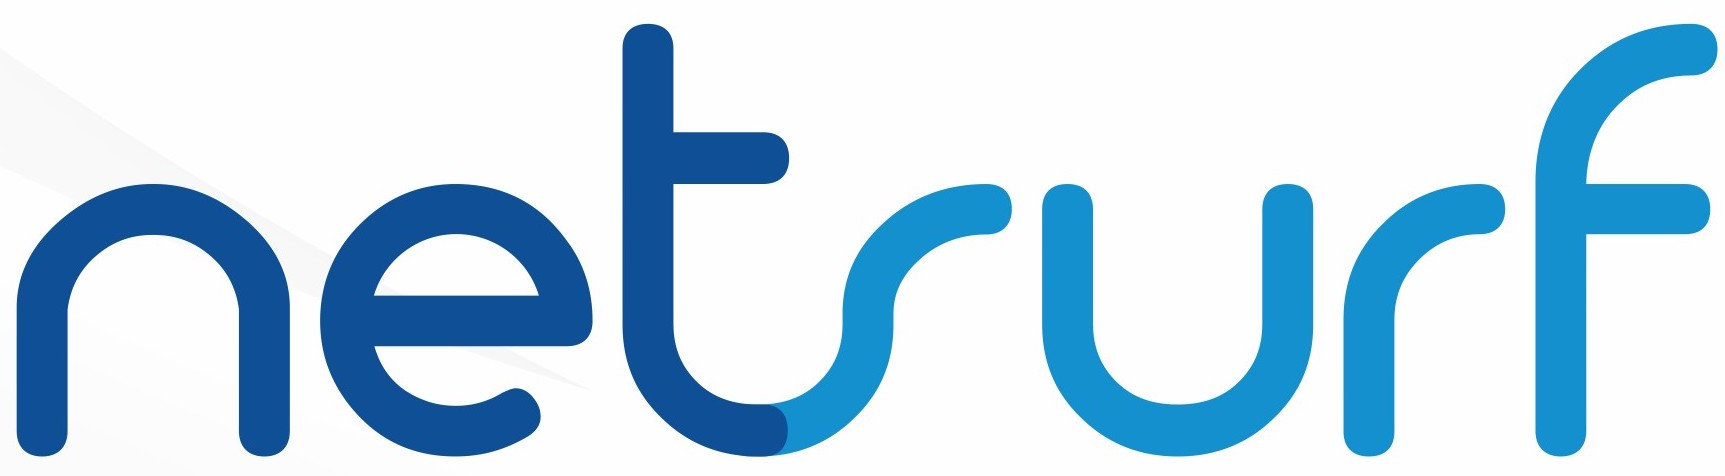 NetSurf upgraded at 2x40G logo